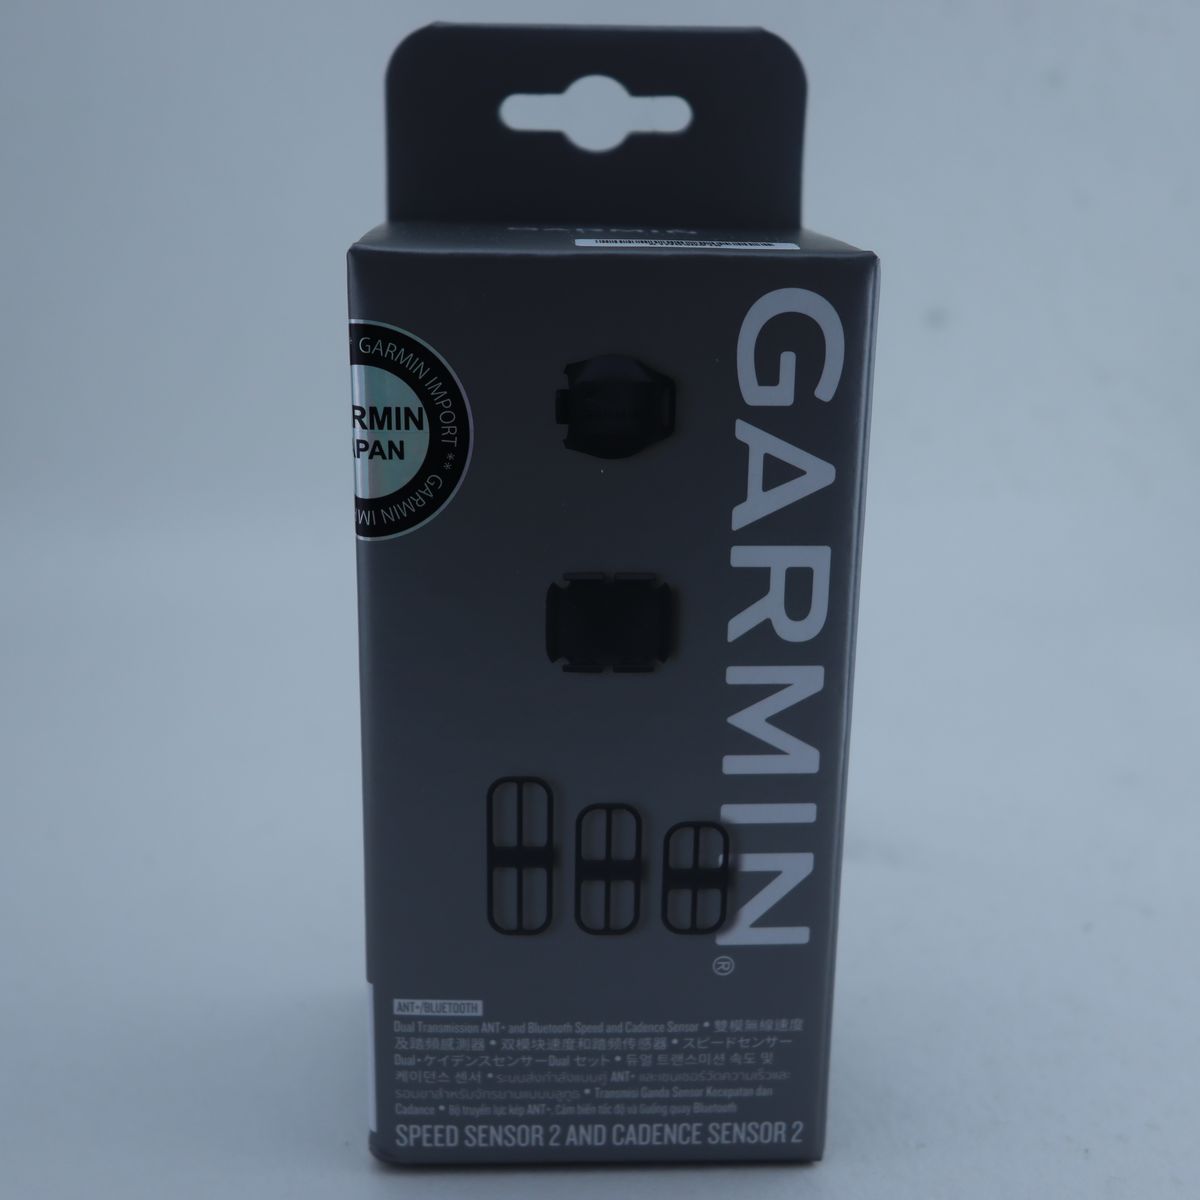 GARMIN】Bluetooth対応でより便利に！スピードセンサーDual 